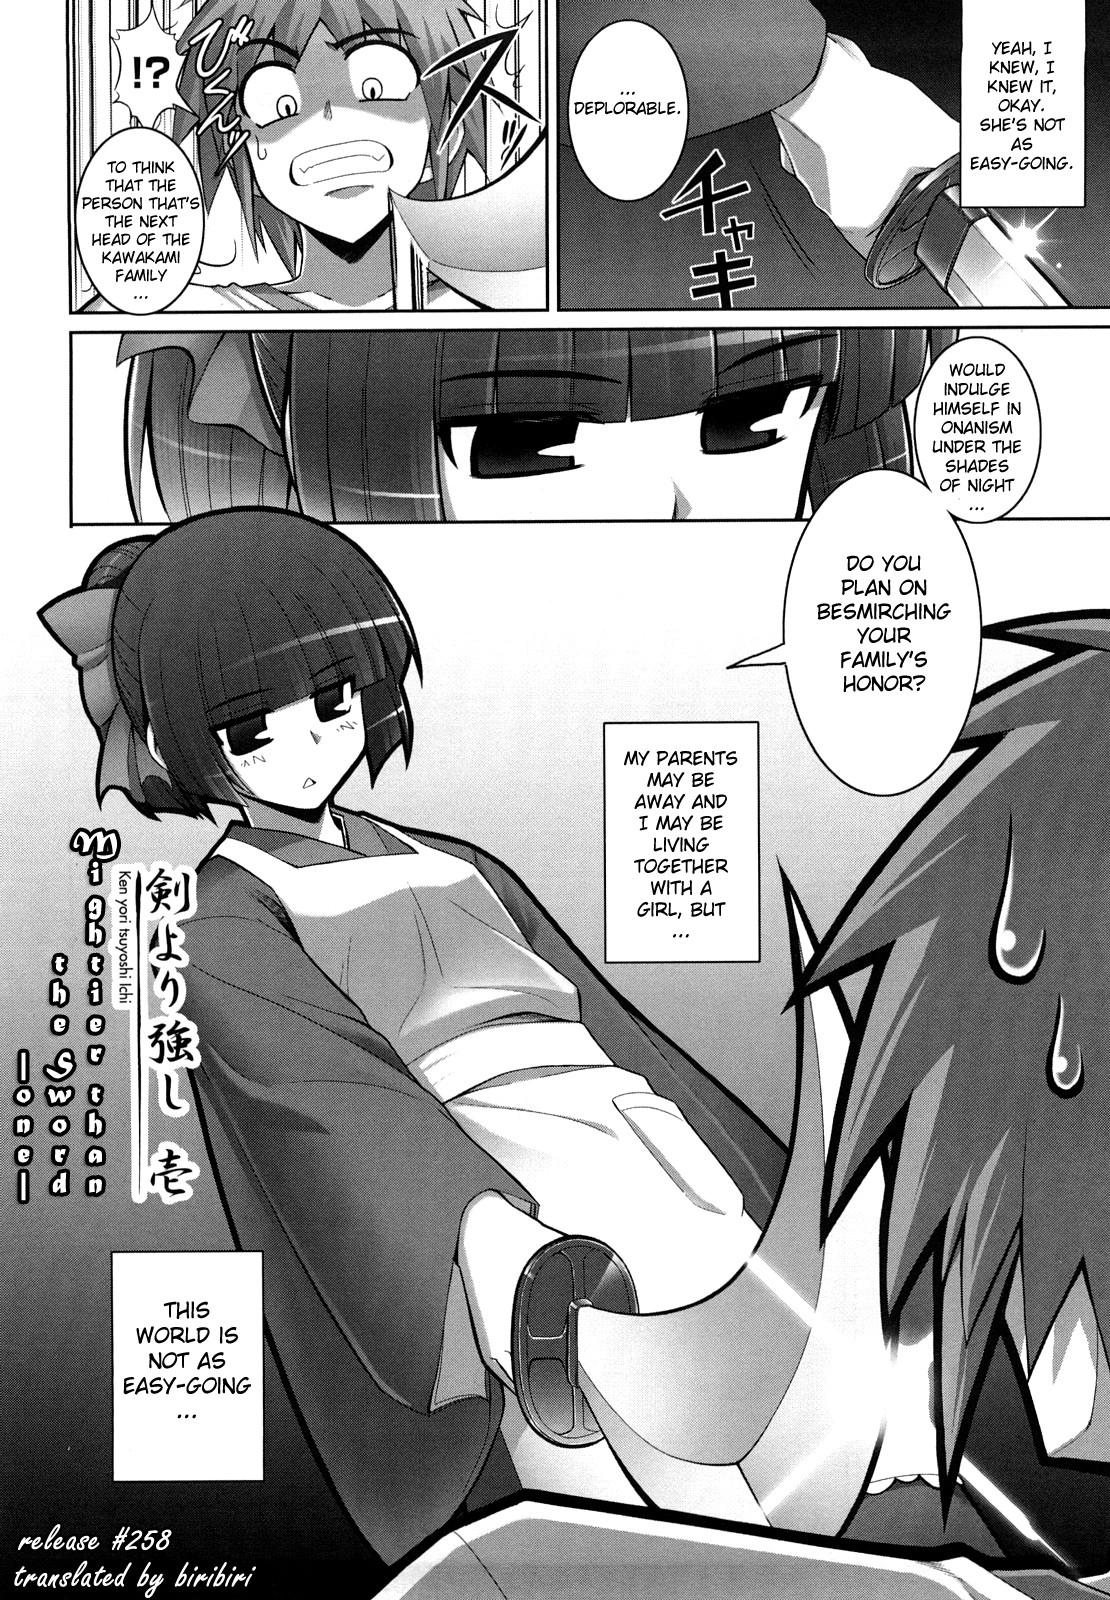 Buttfucking Ken yori Tsuyoshi - Mightier Than The Sword. Solo Girl - Page 8